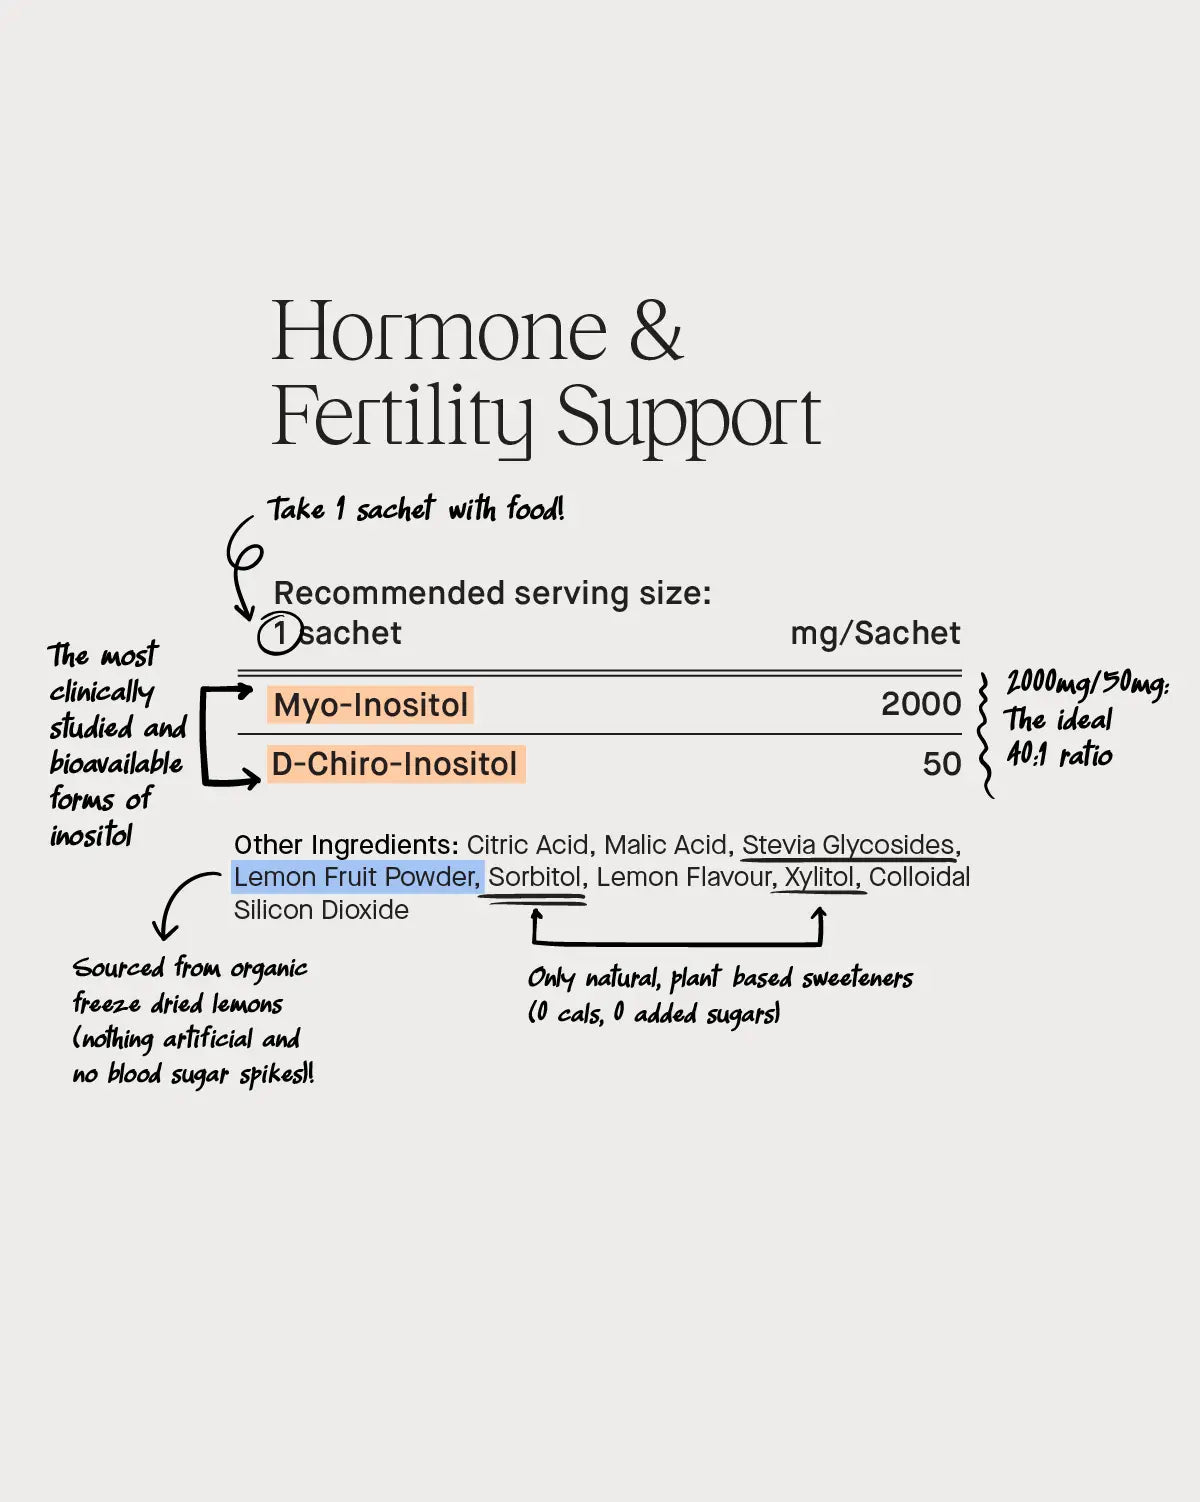 Hormone & Fertility Support